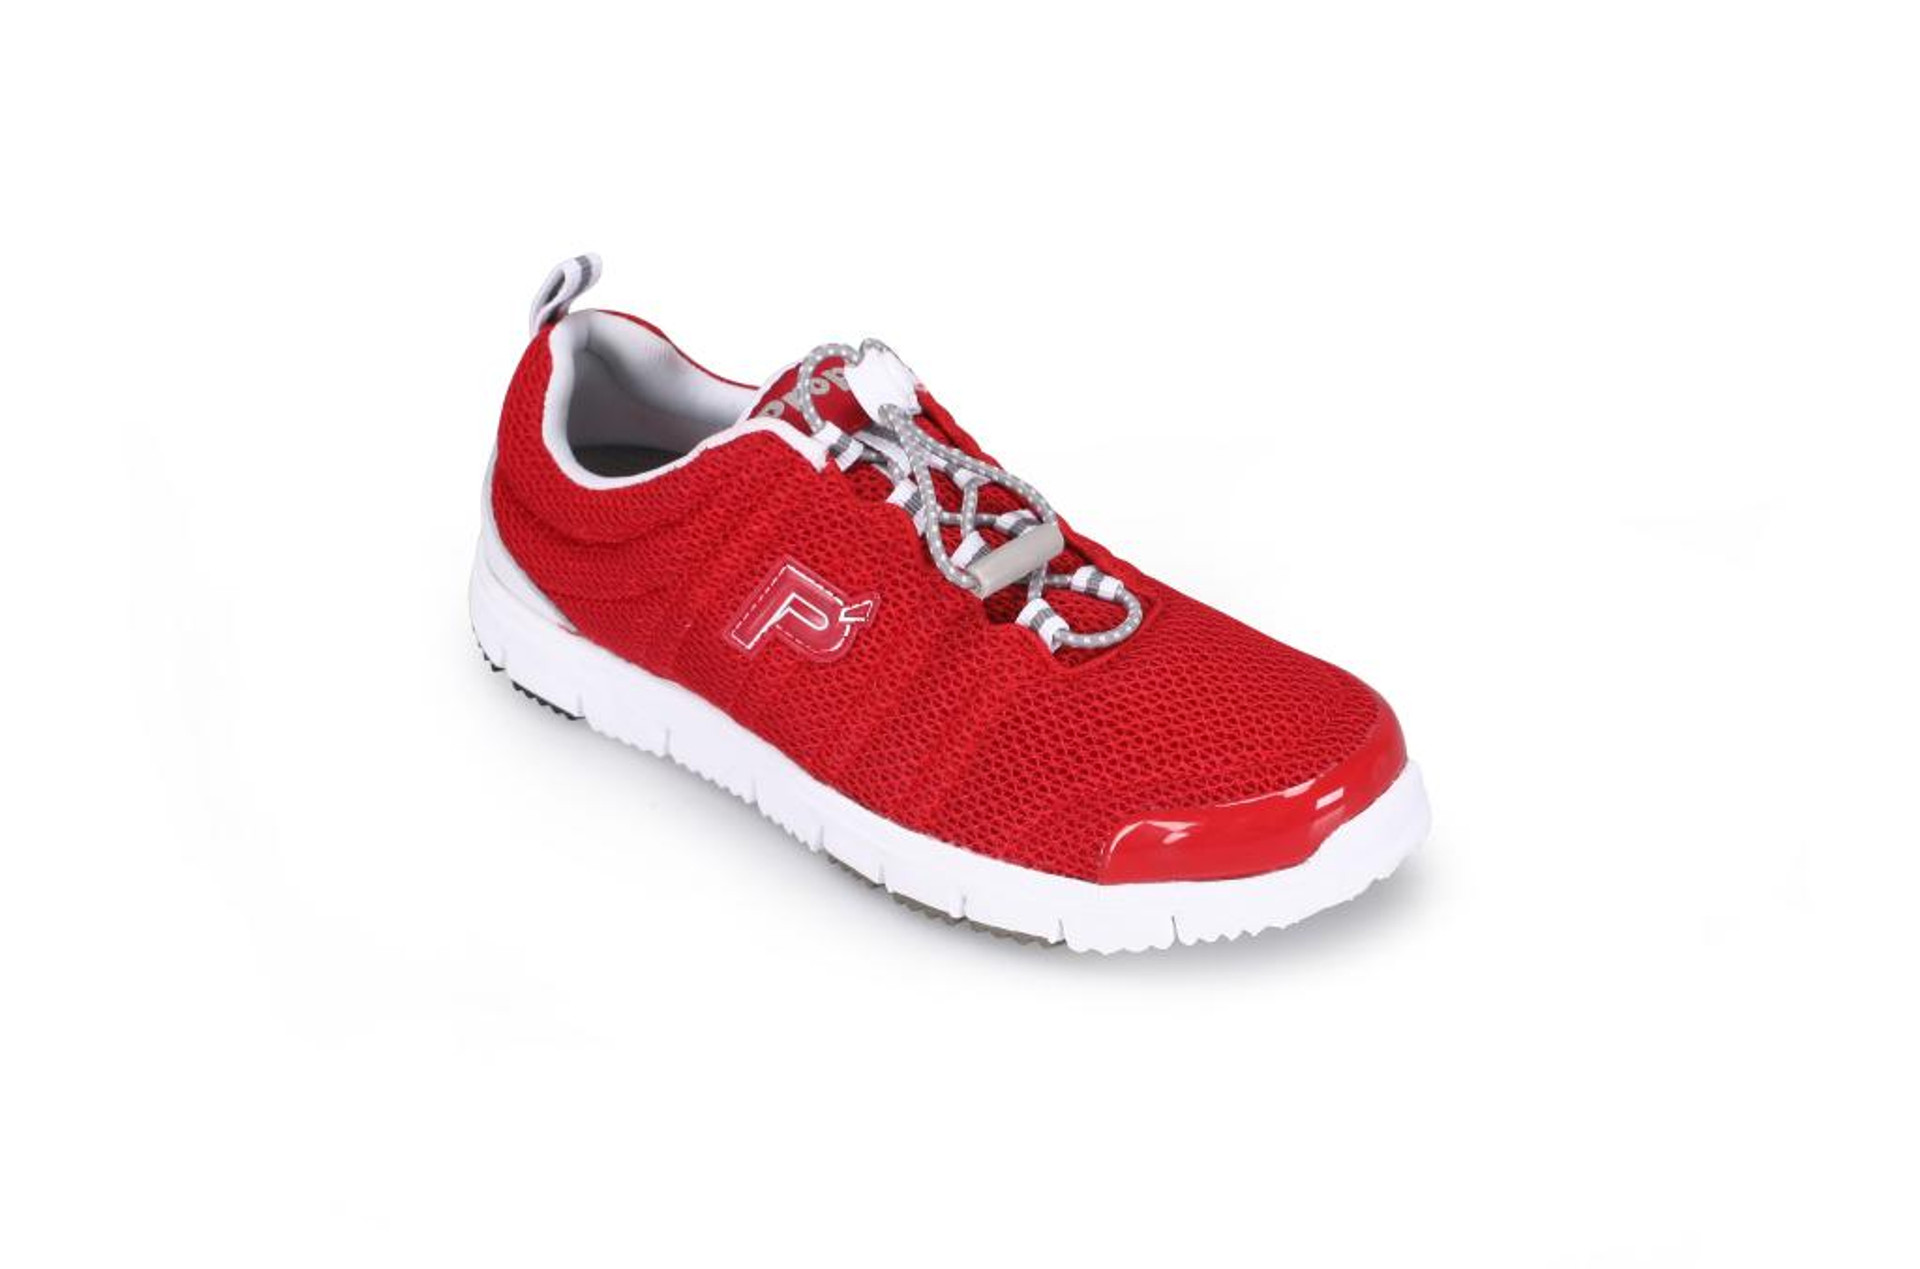 Propet Travel Walker II Athletic Walking Shoe for Women | Orthotic Shop